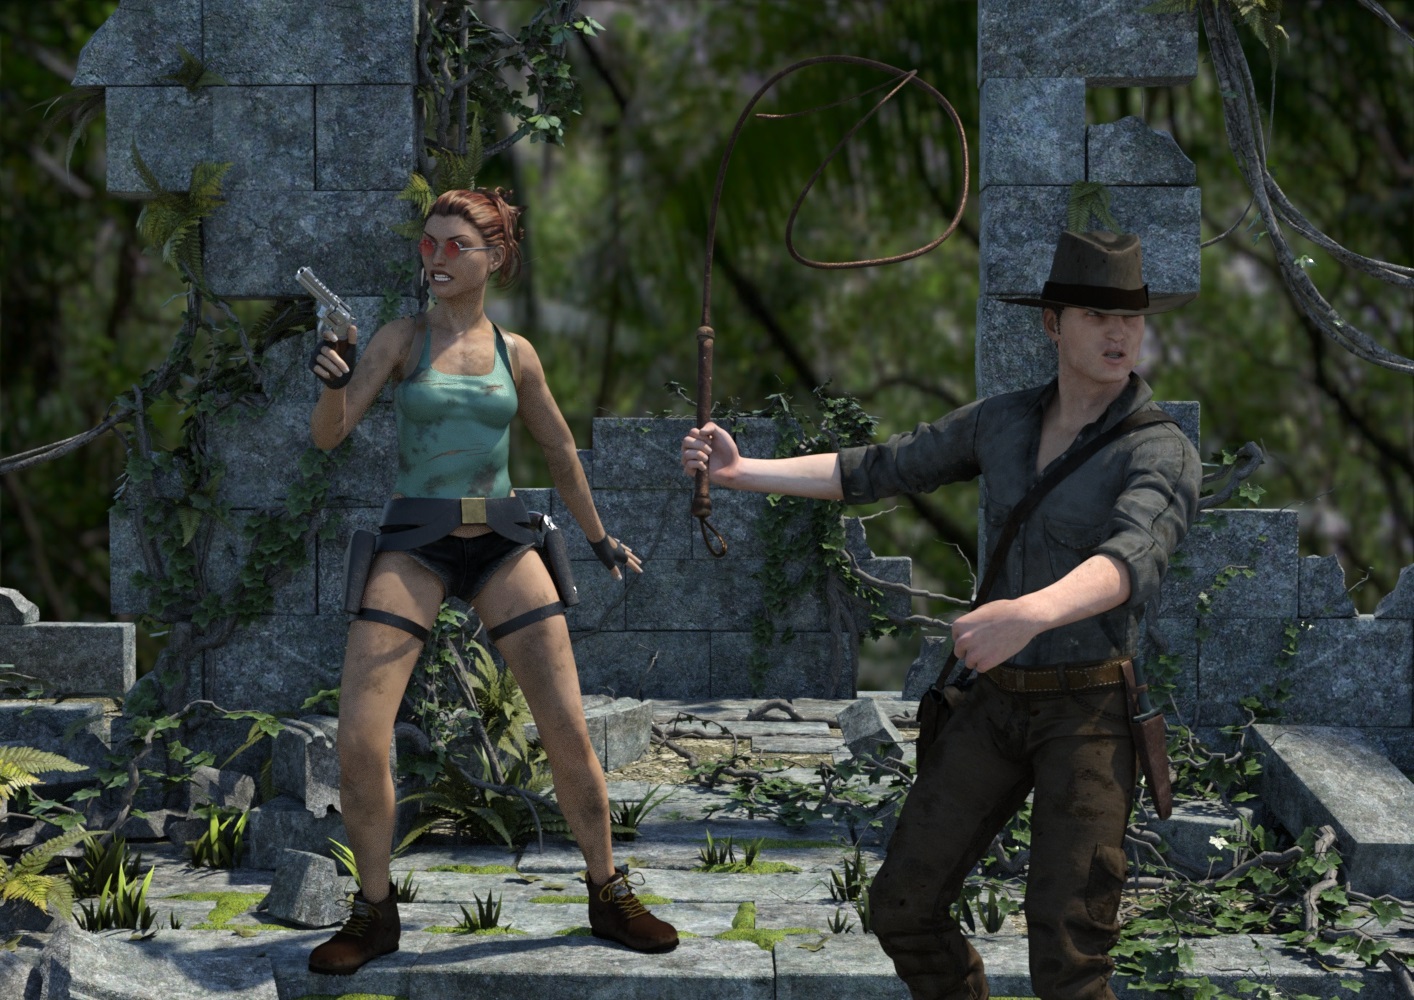 Lara Croft and Indiana Jones